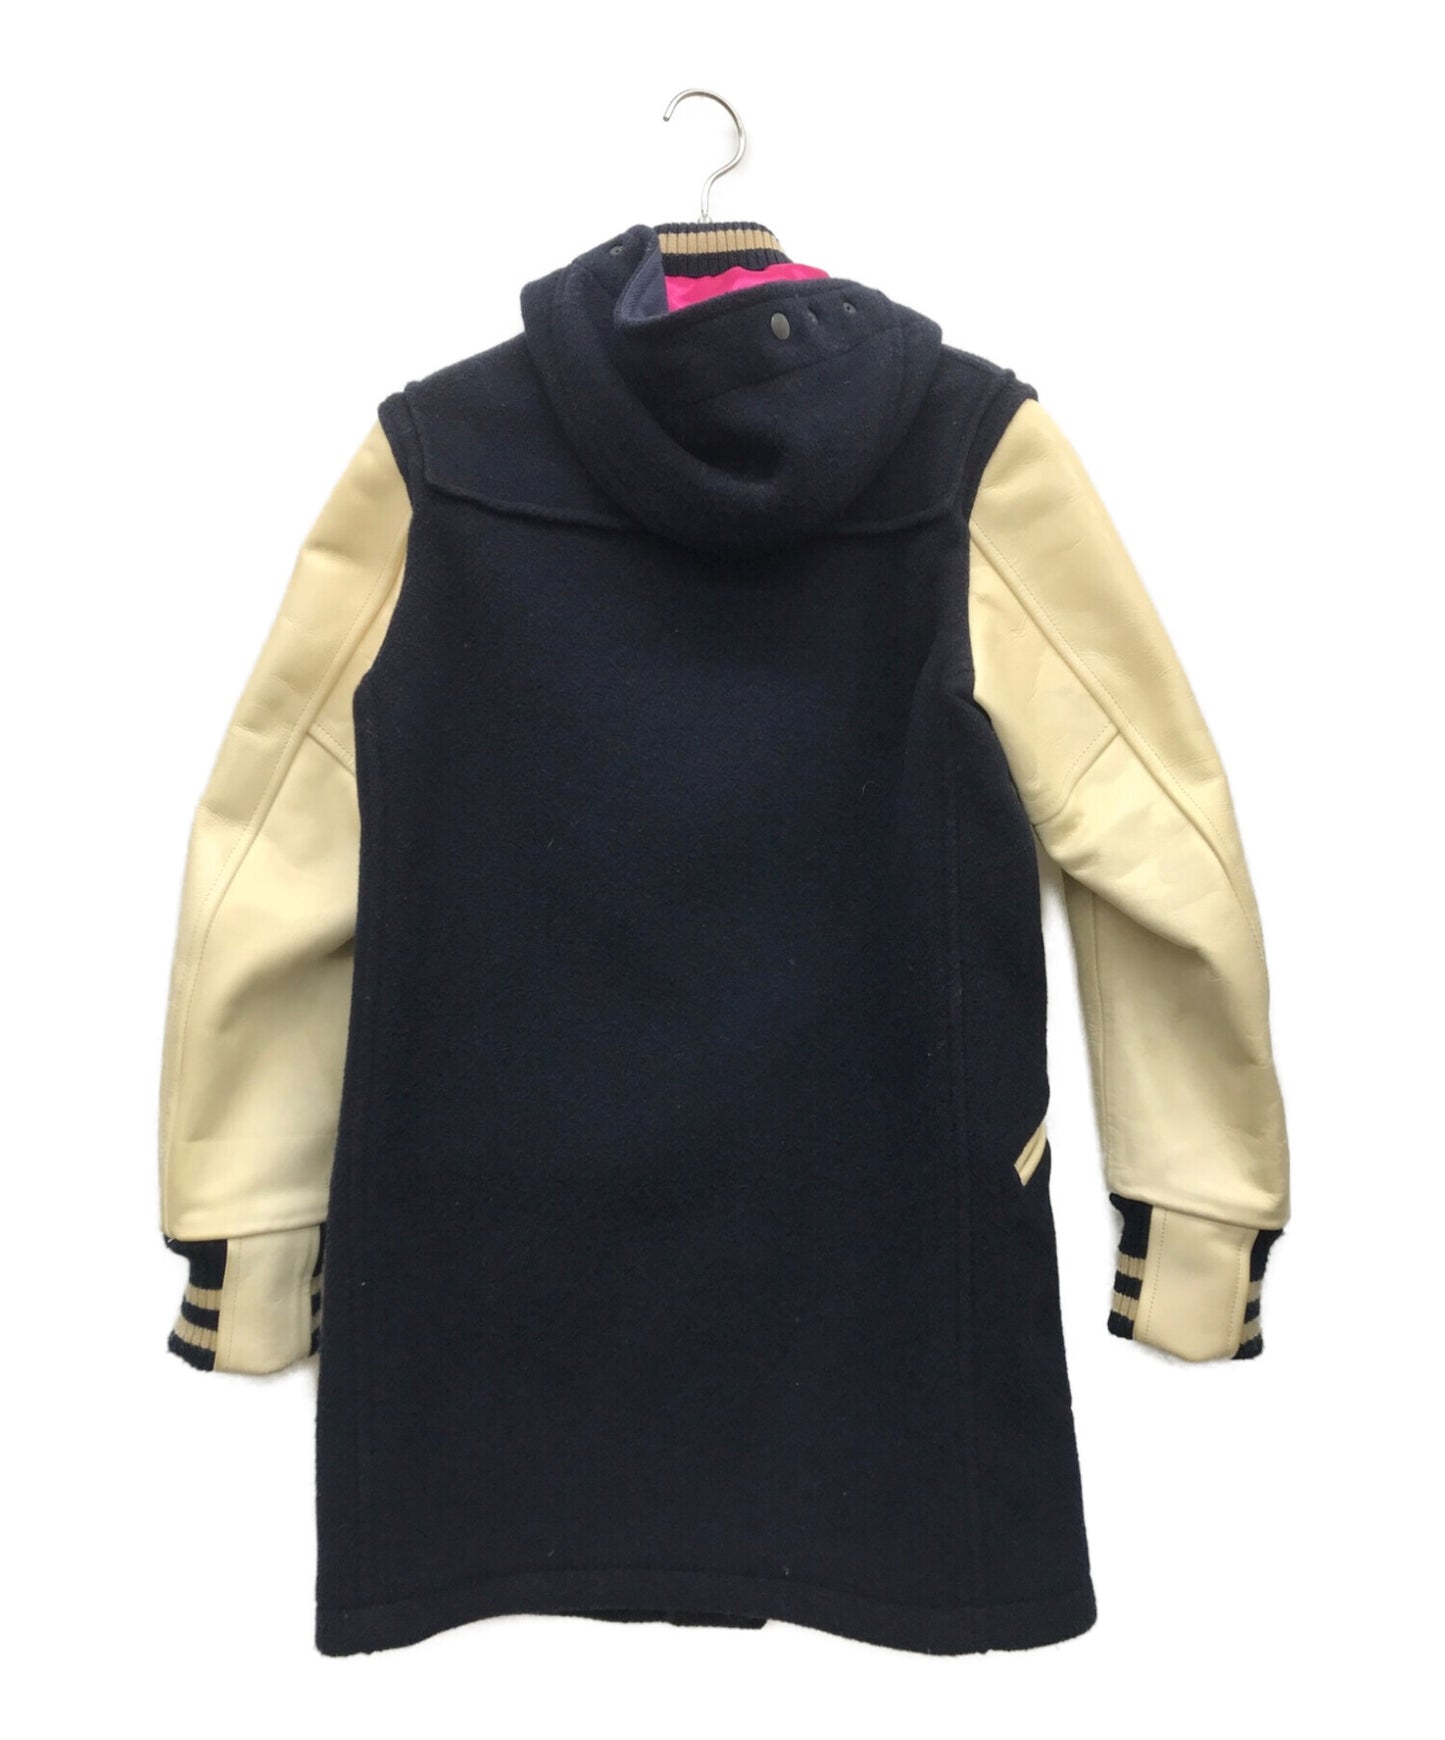 Comme des Garcons Junya Watanabe Man Duffel Coat with Varsity Jacket UJ-C001과 같은 송아지 가죽 소매